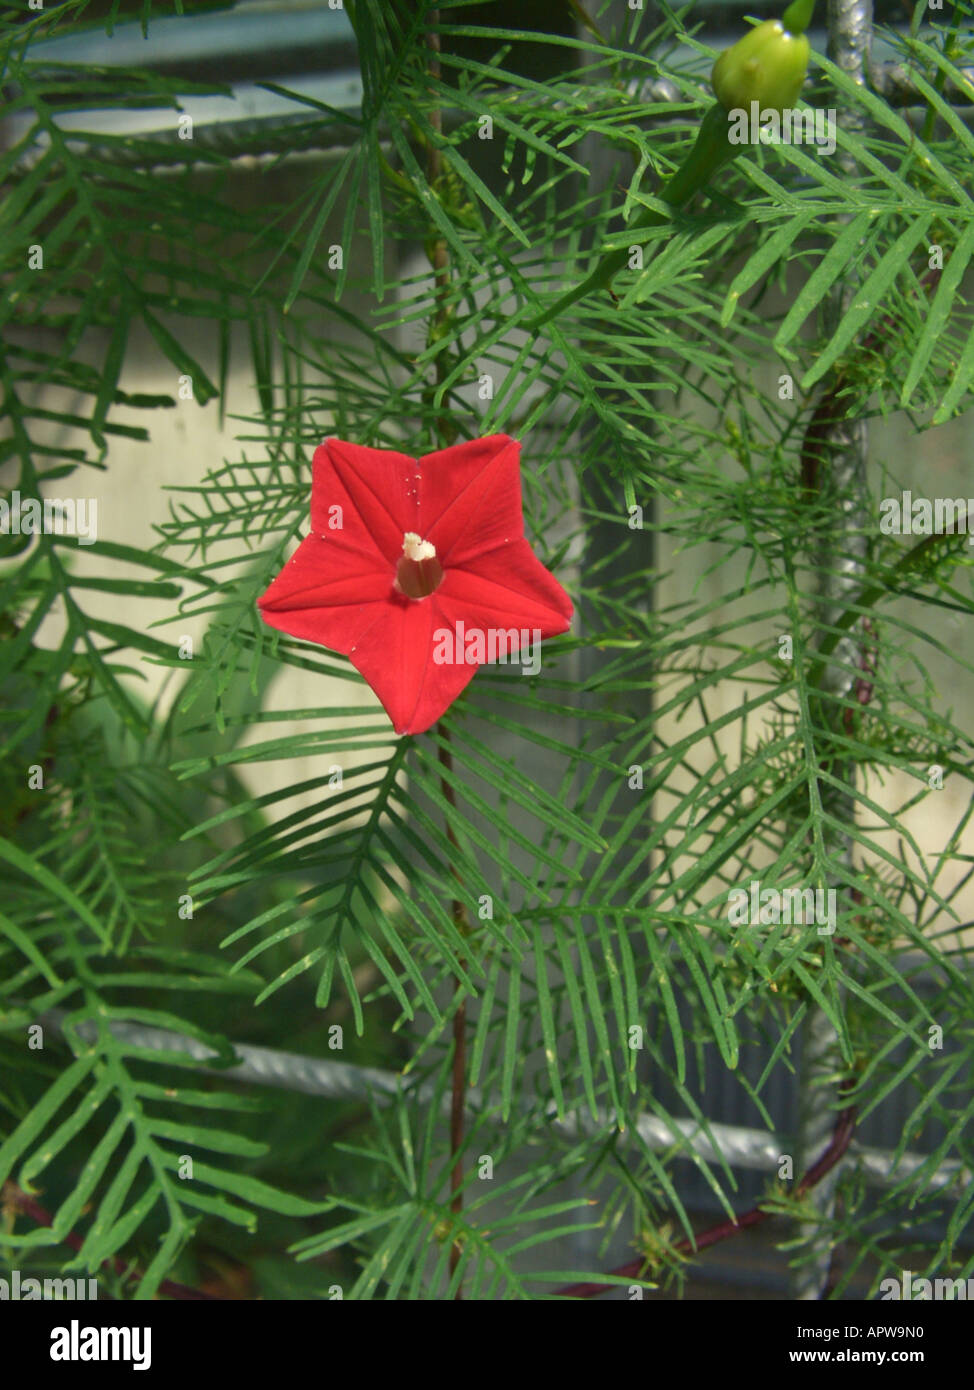 Cardinal Climber, Cypress Vine, Quamoclit, Cypressvine Morningglory, Hummingbird Vine, Star Glory (Ipomoea quamoclit), plant at Stock Photo